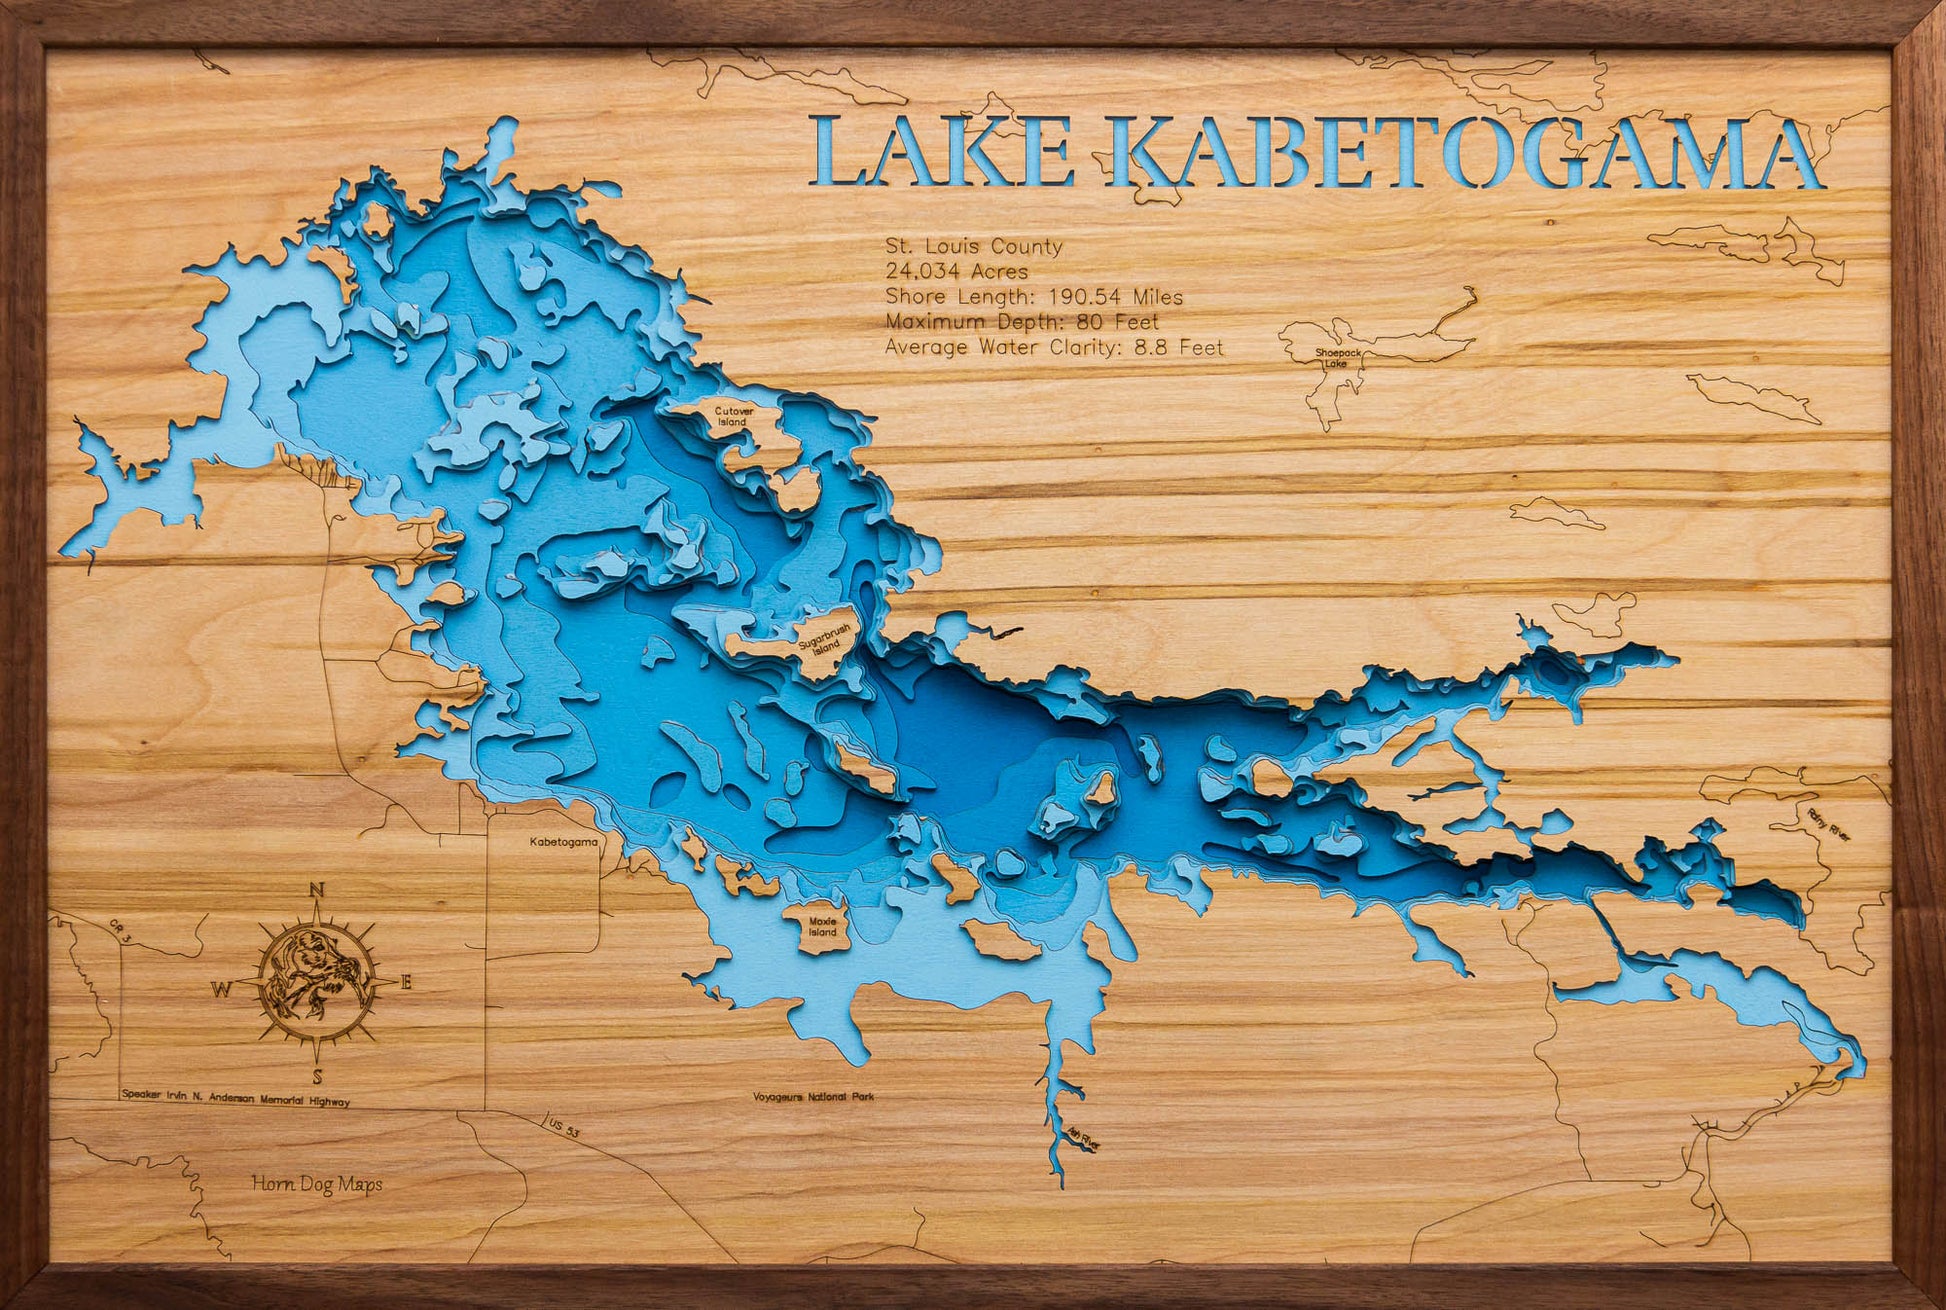 Kabetogama Lake in St. Louis County, Minnesota